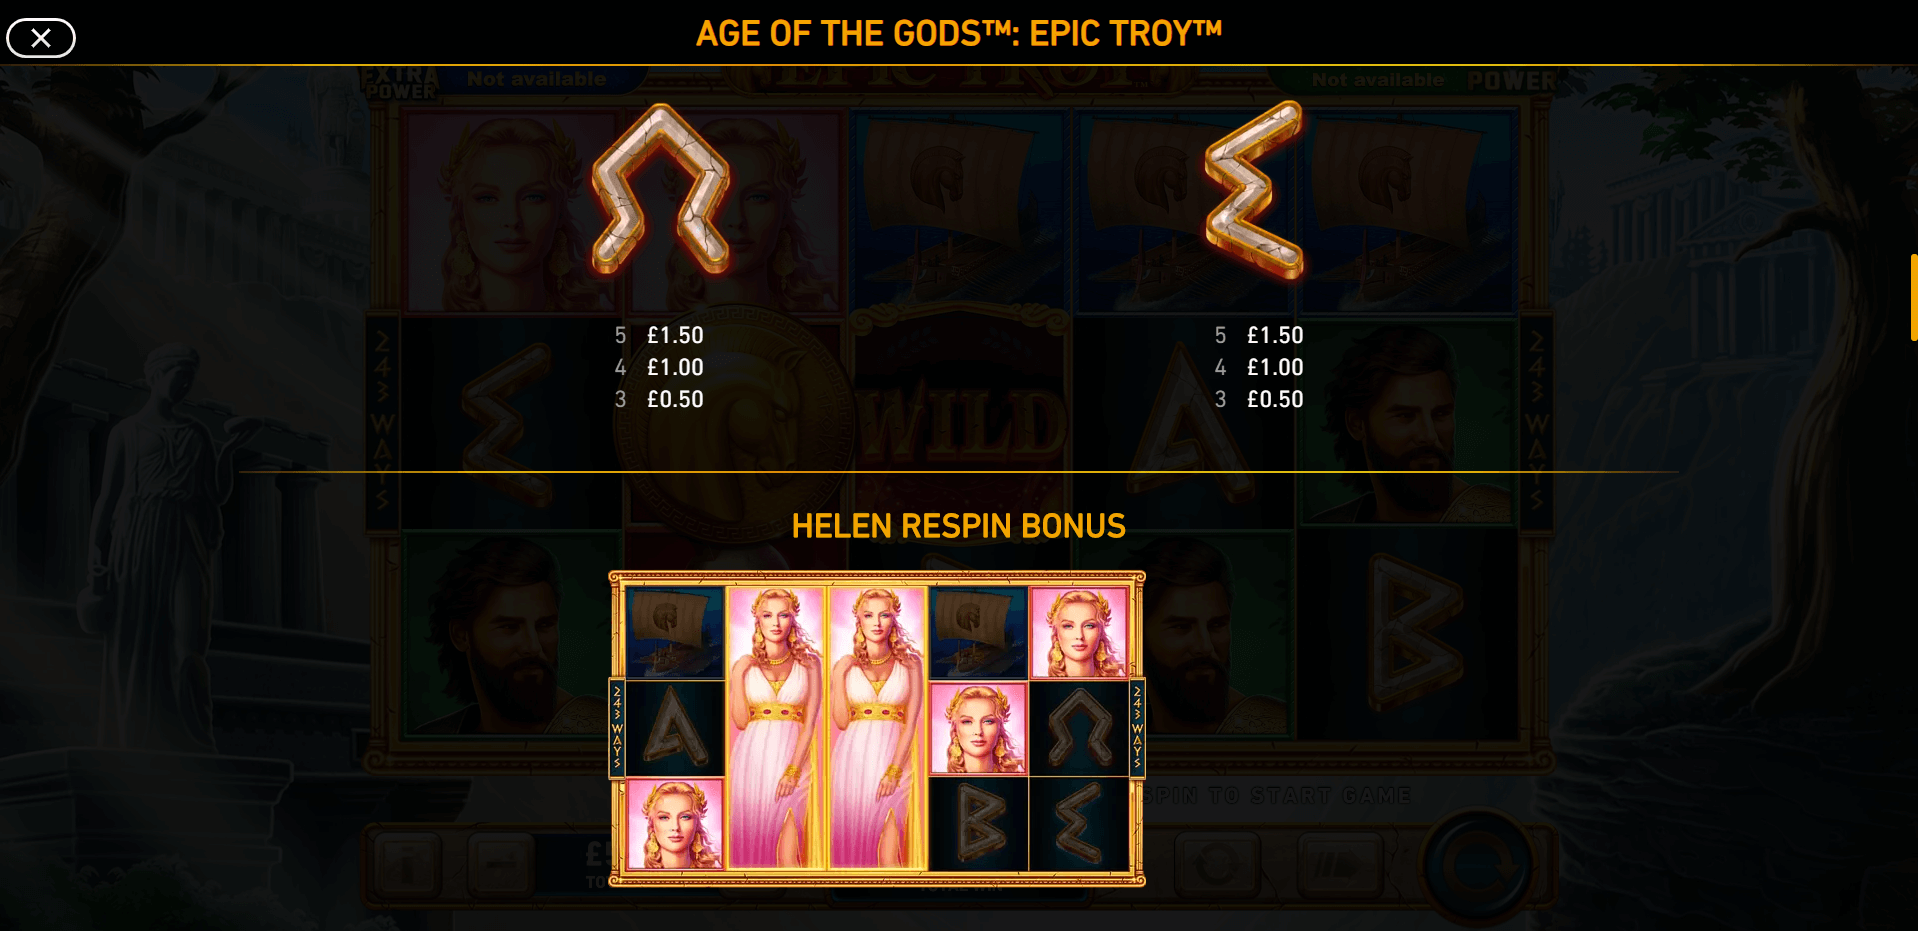 age of the gods epic troy slot machine detail image 3